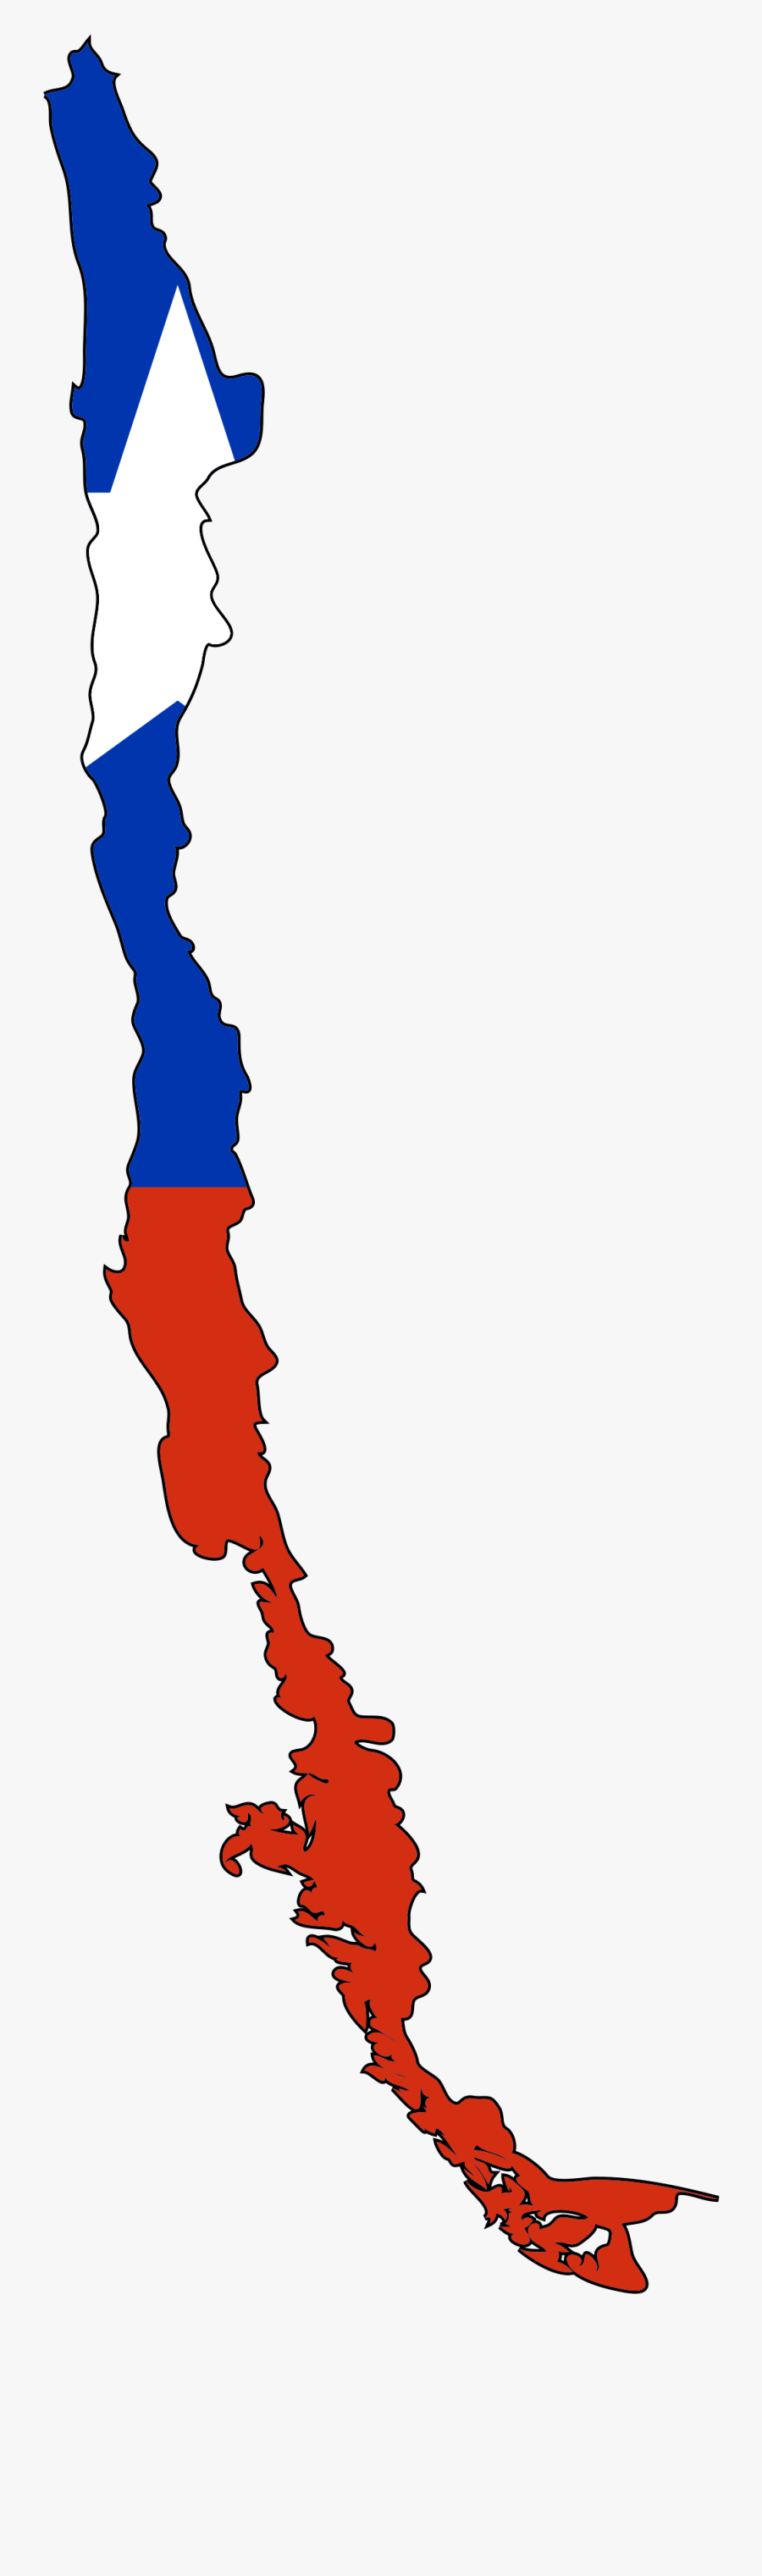 Chile Flag Map Png, Transparent Clipart